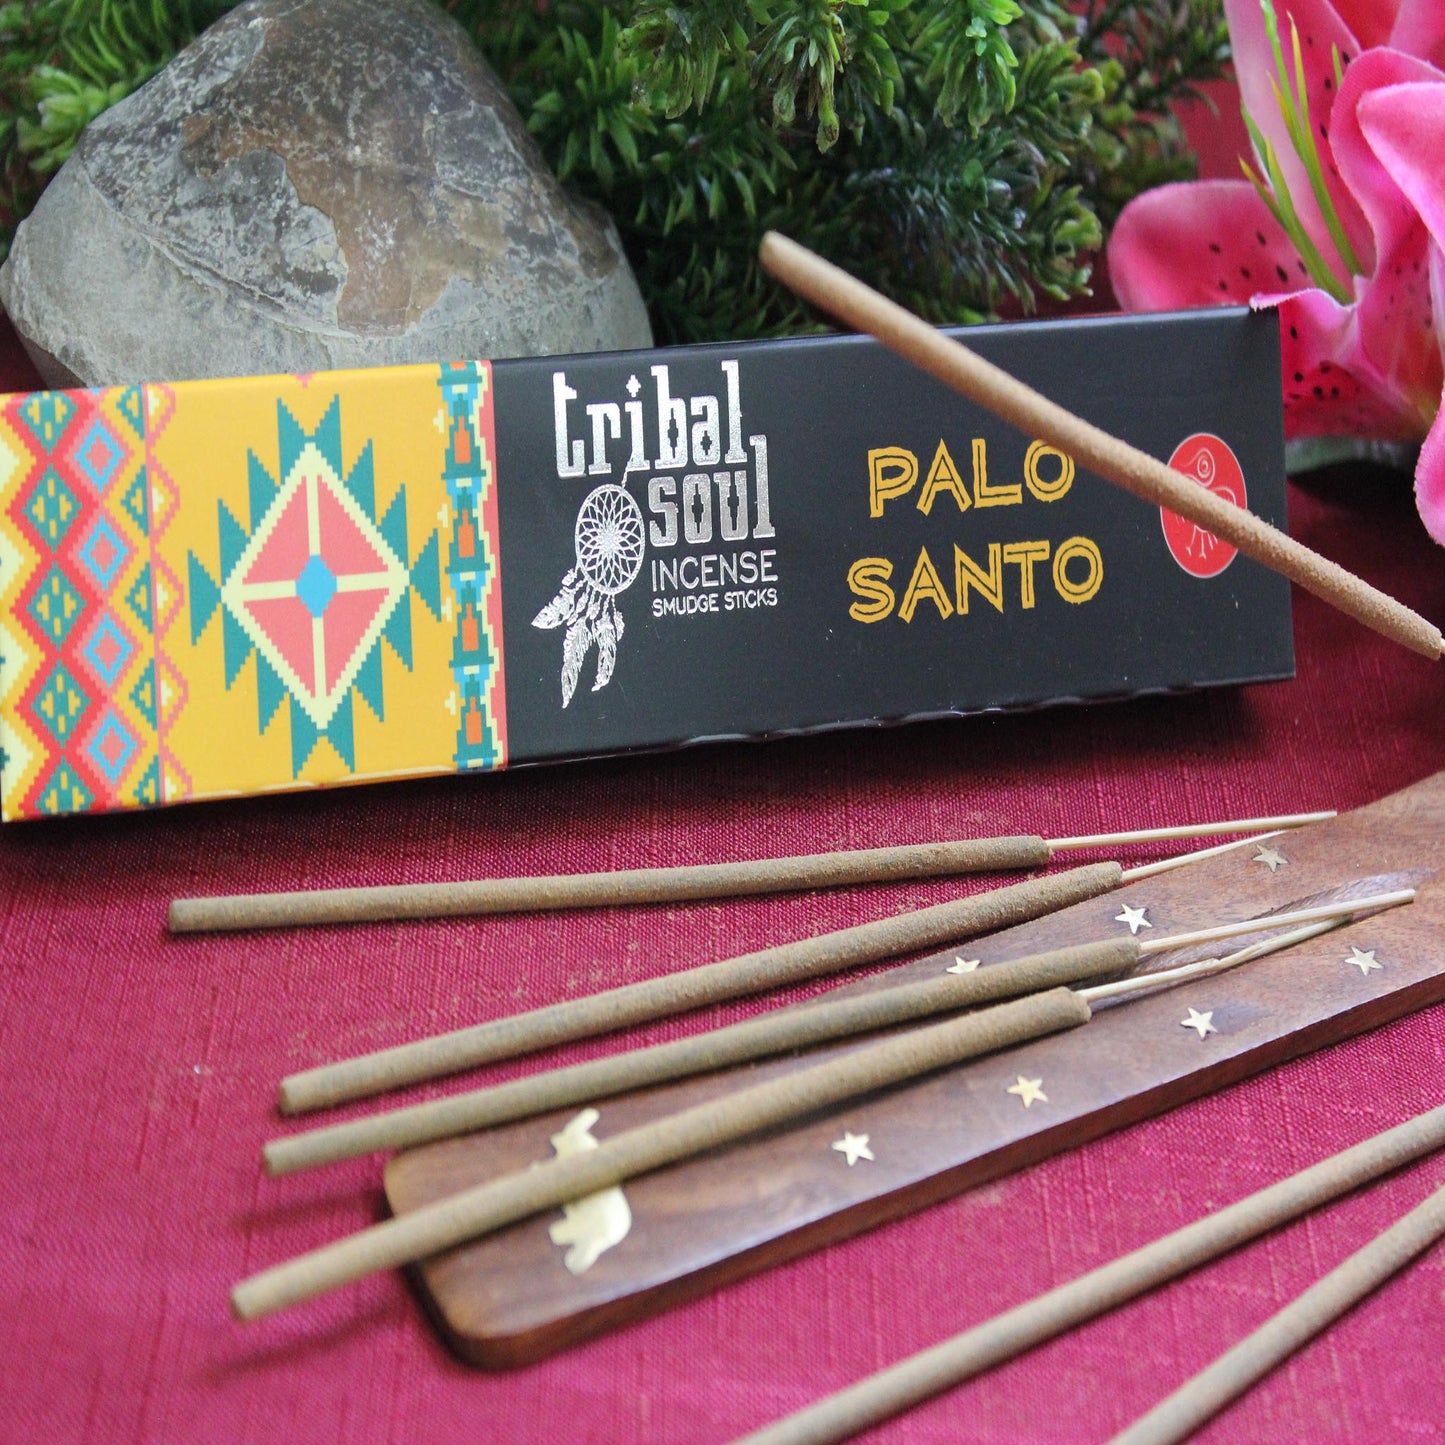 Palo Santo Incense by Tribal Soul (Inc002)